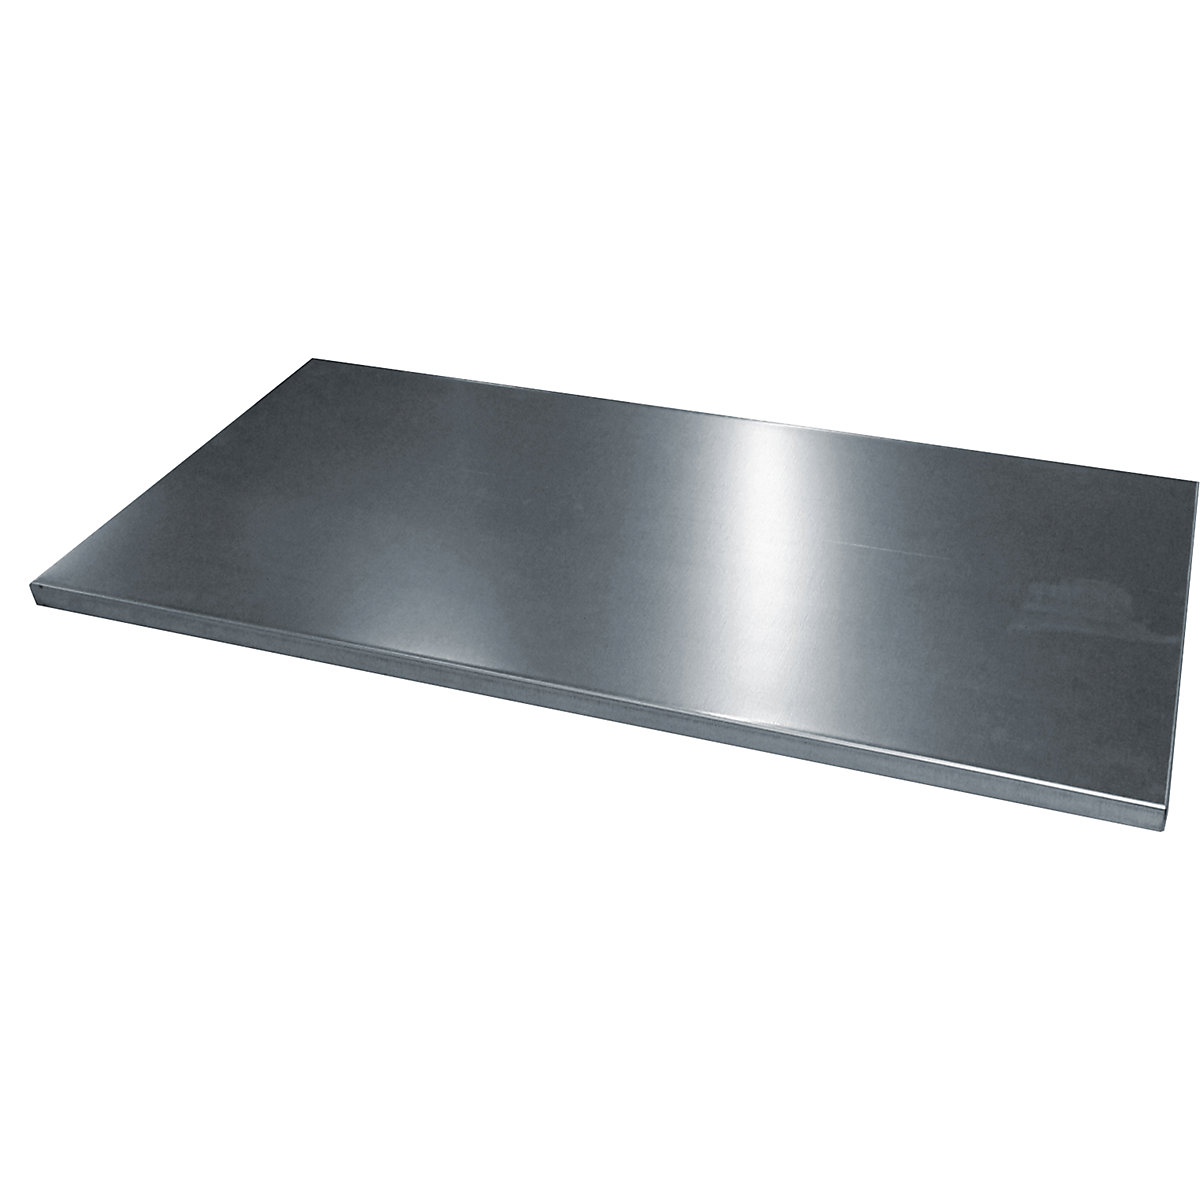 Shelf – C+P, width 930 mm, depth 500 mm